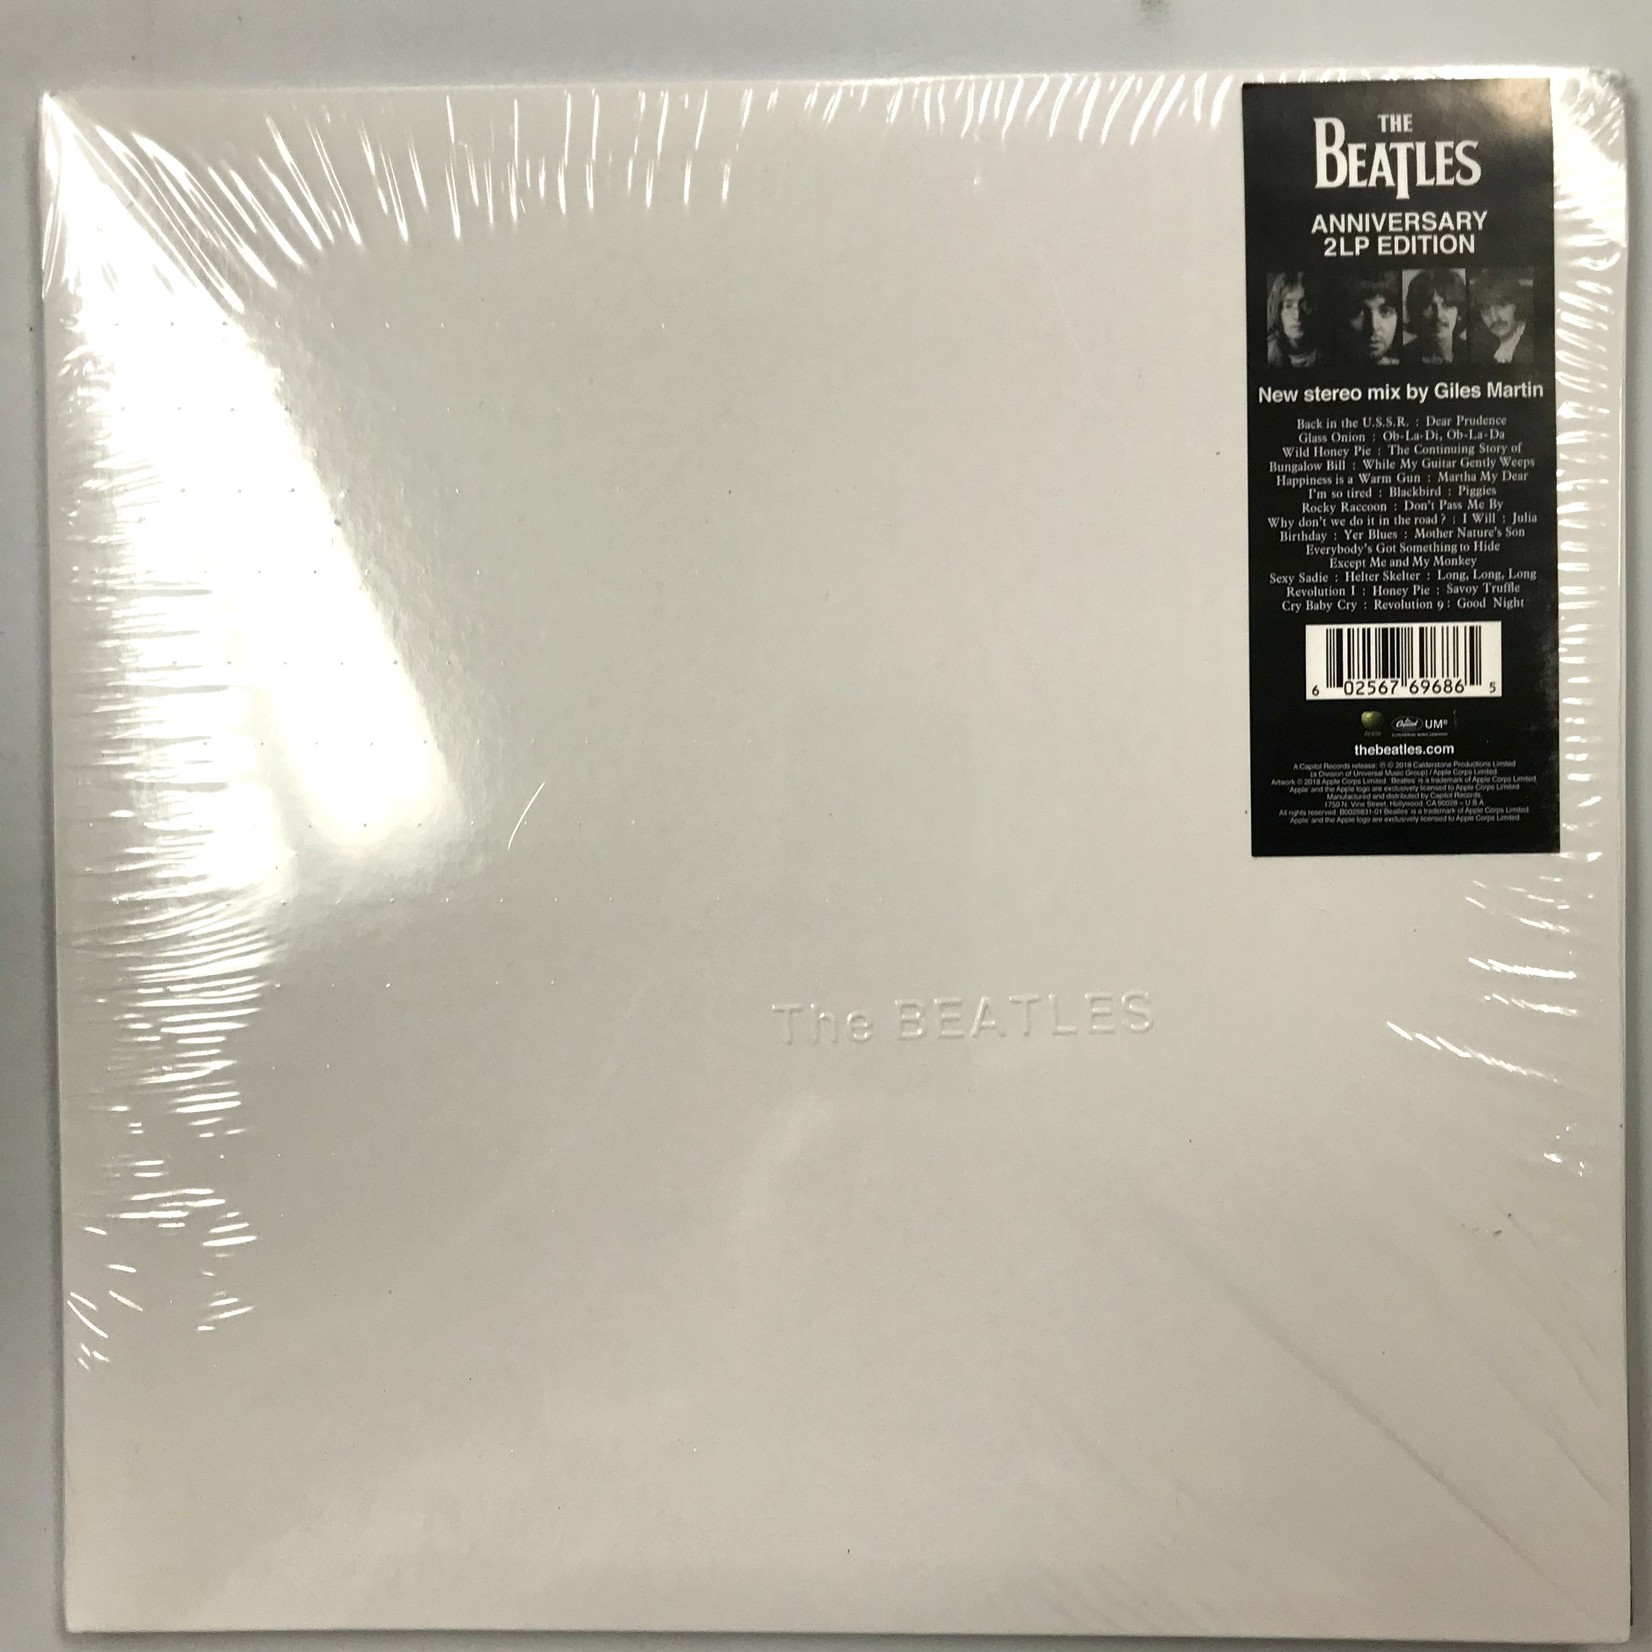 Beatles - The Beatles (White Album) - Vinyl 2-LP Anniversary Edition (NEW)  - MOJOMALA LLC